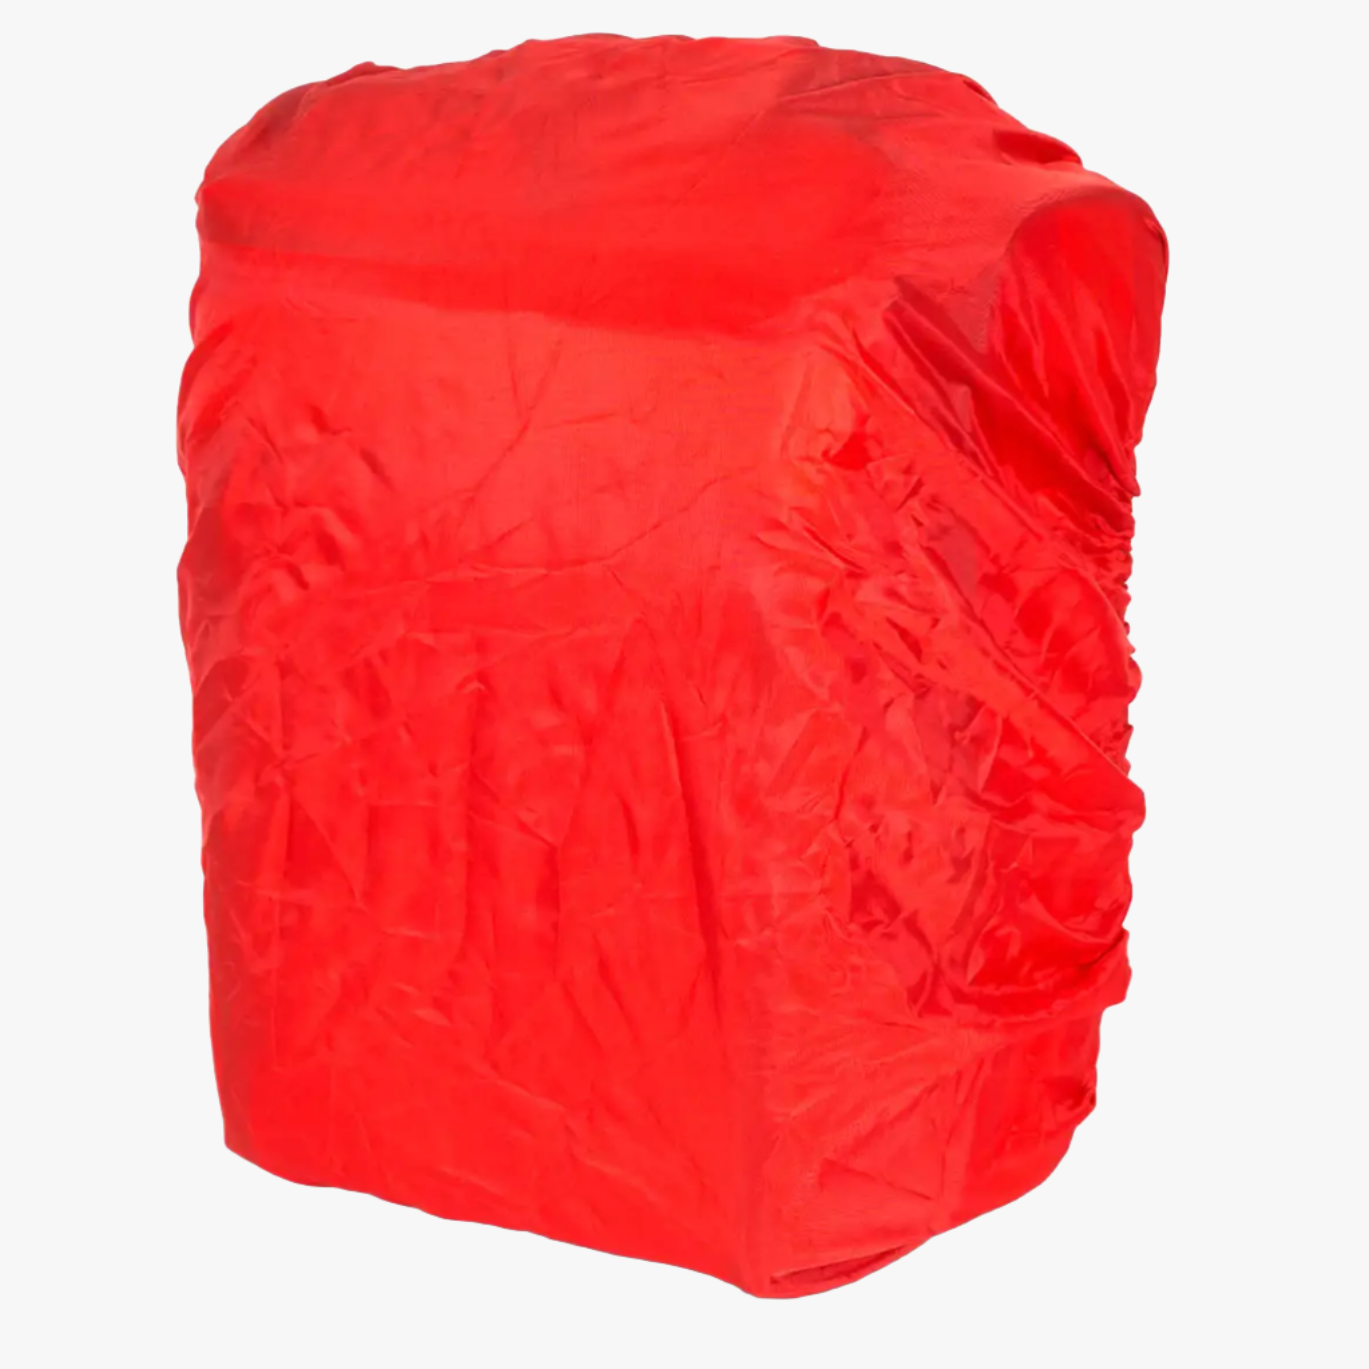 Emergency backpack red